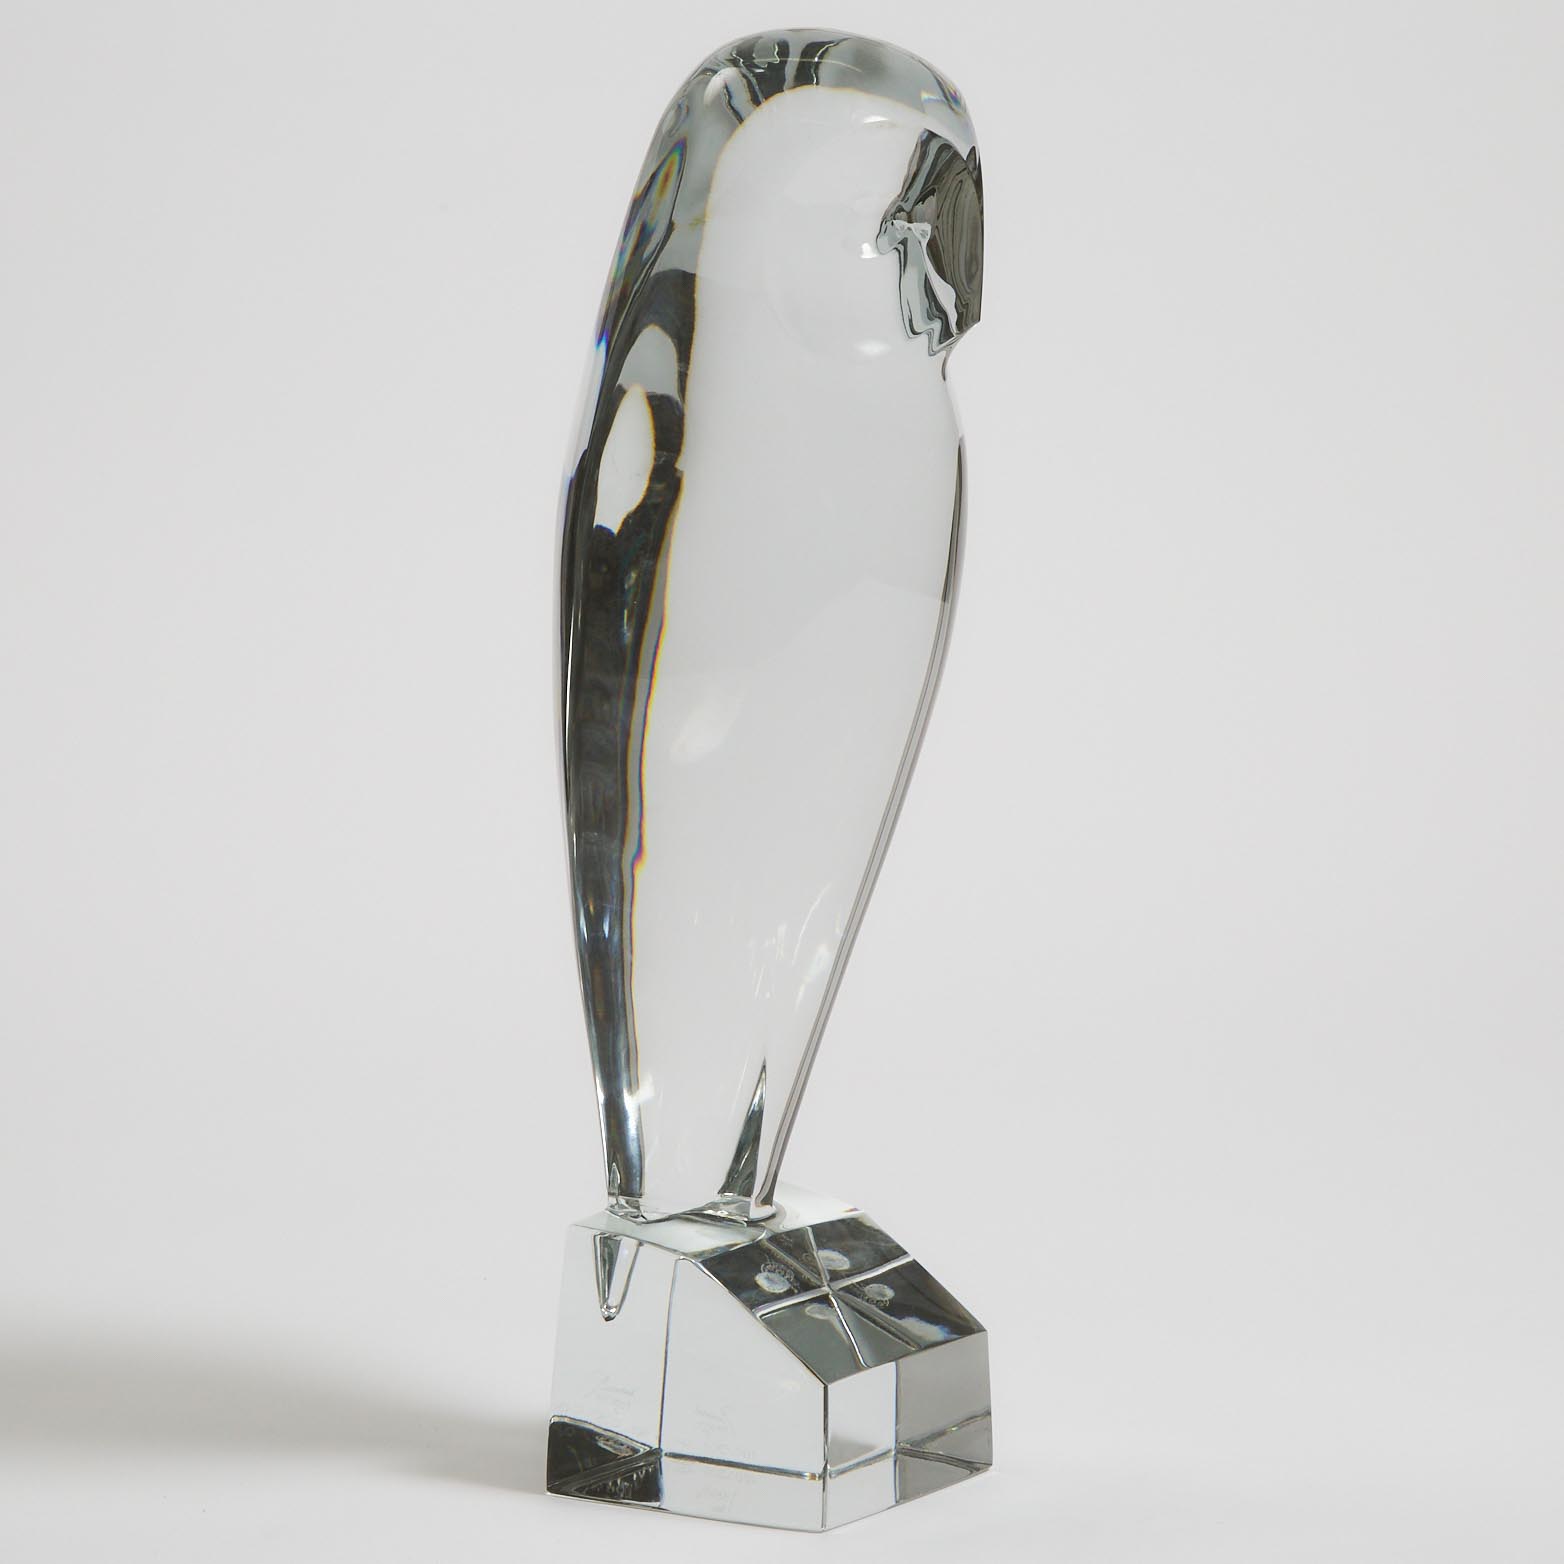 Baccarat Large Glass Model of an Owl, Robert Rigot, 160/200, 1981